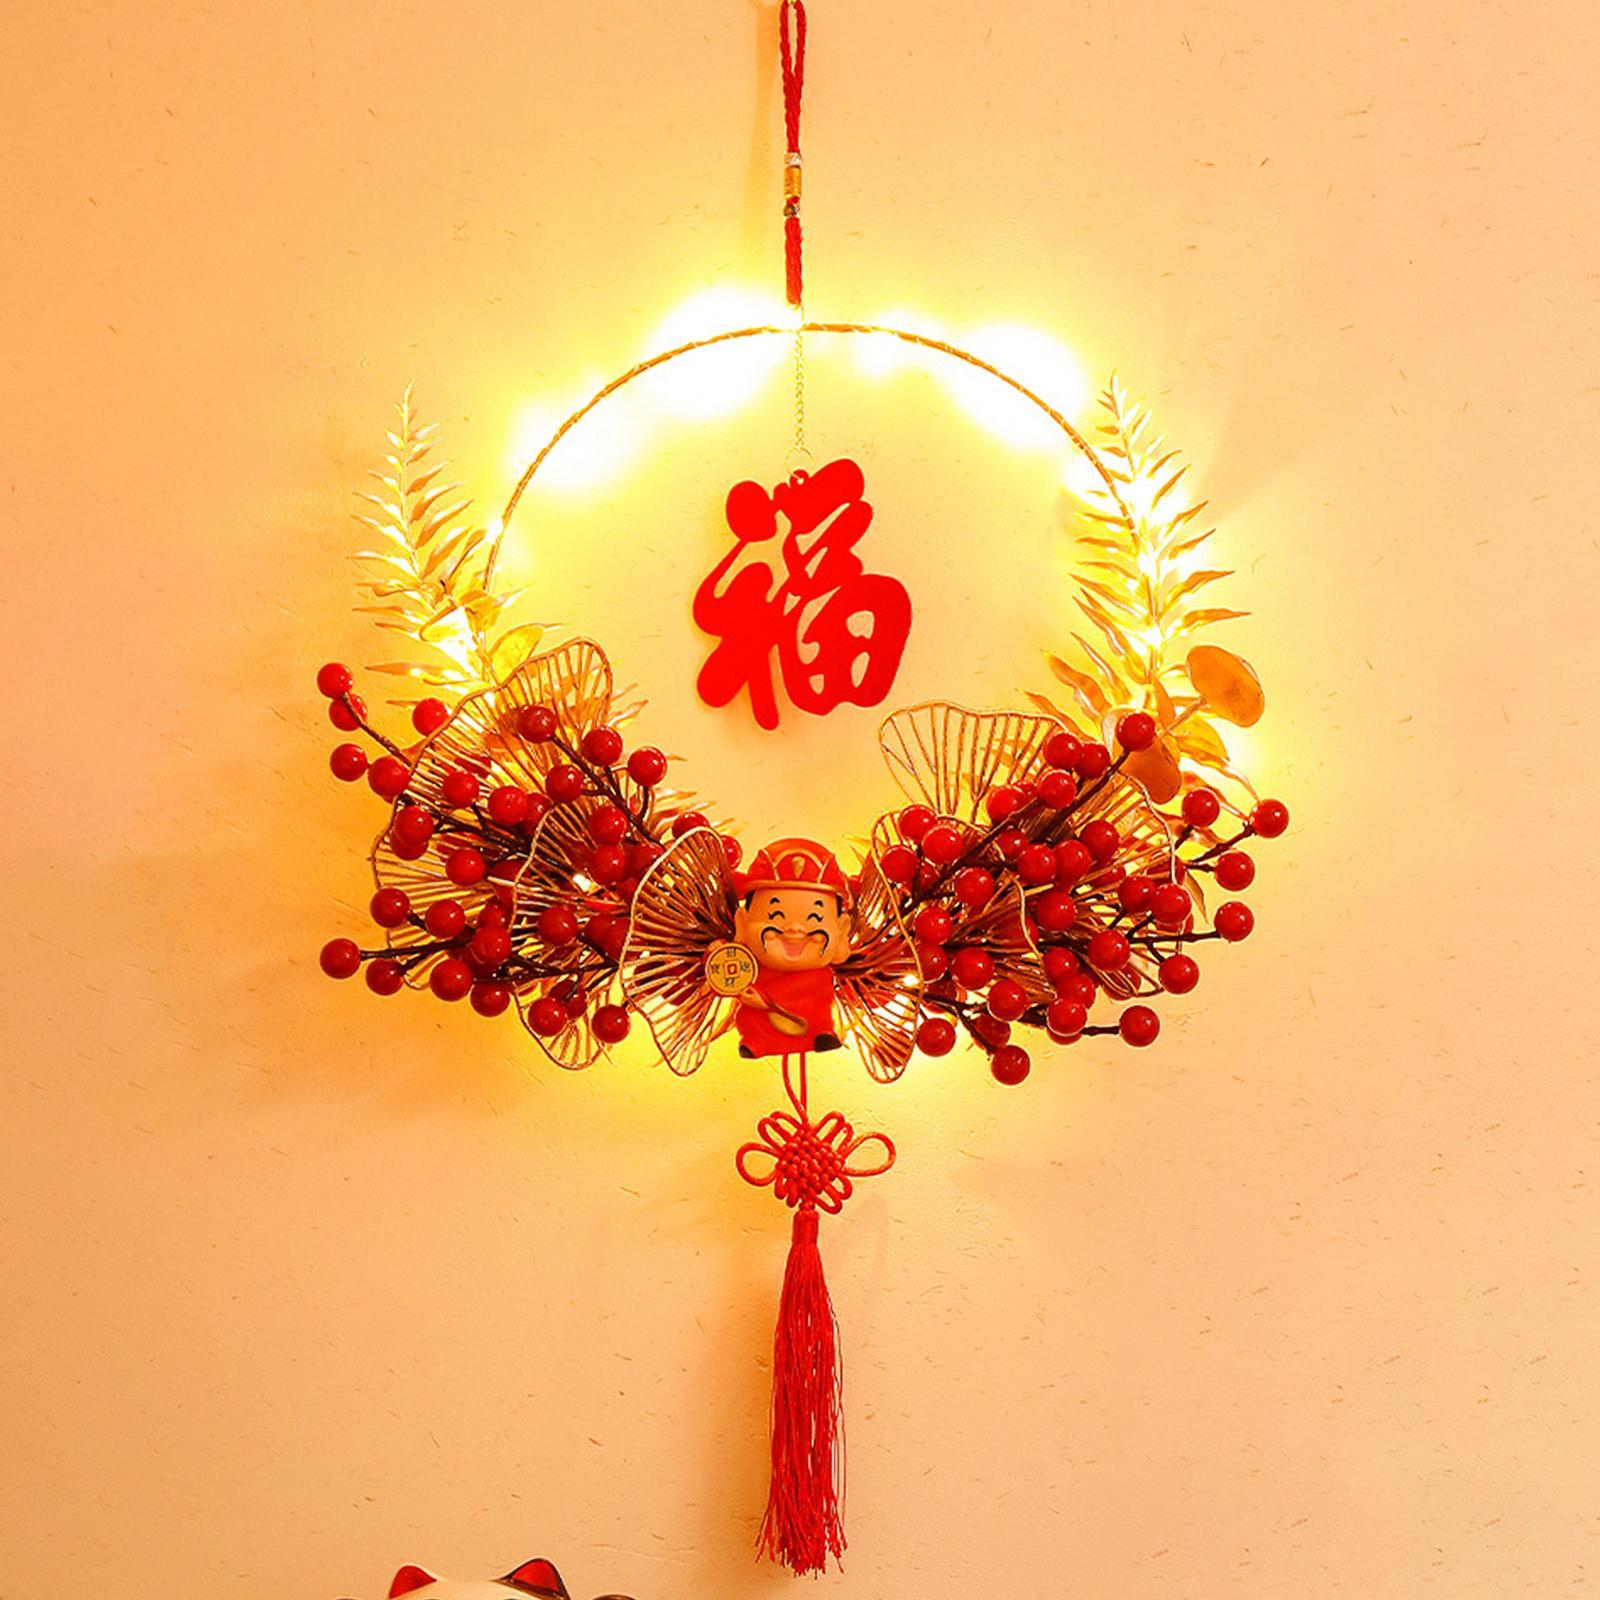 Chinese New Year Garland Home Decoration Scene Layout Door Hanging